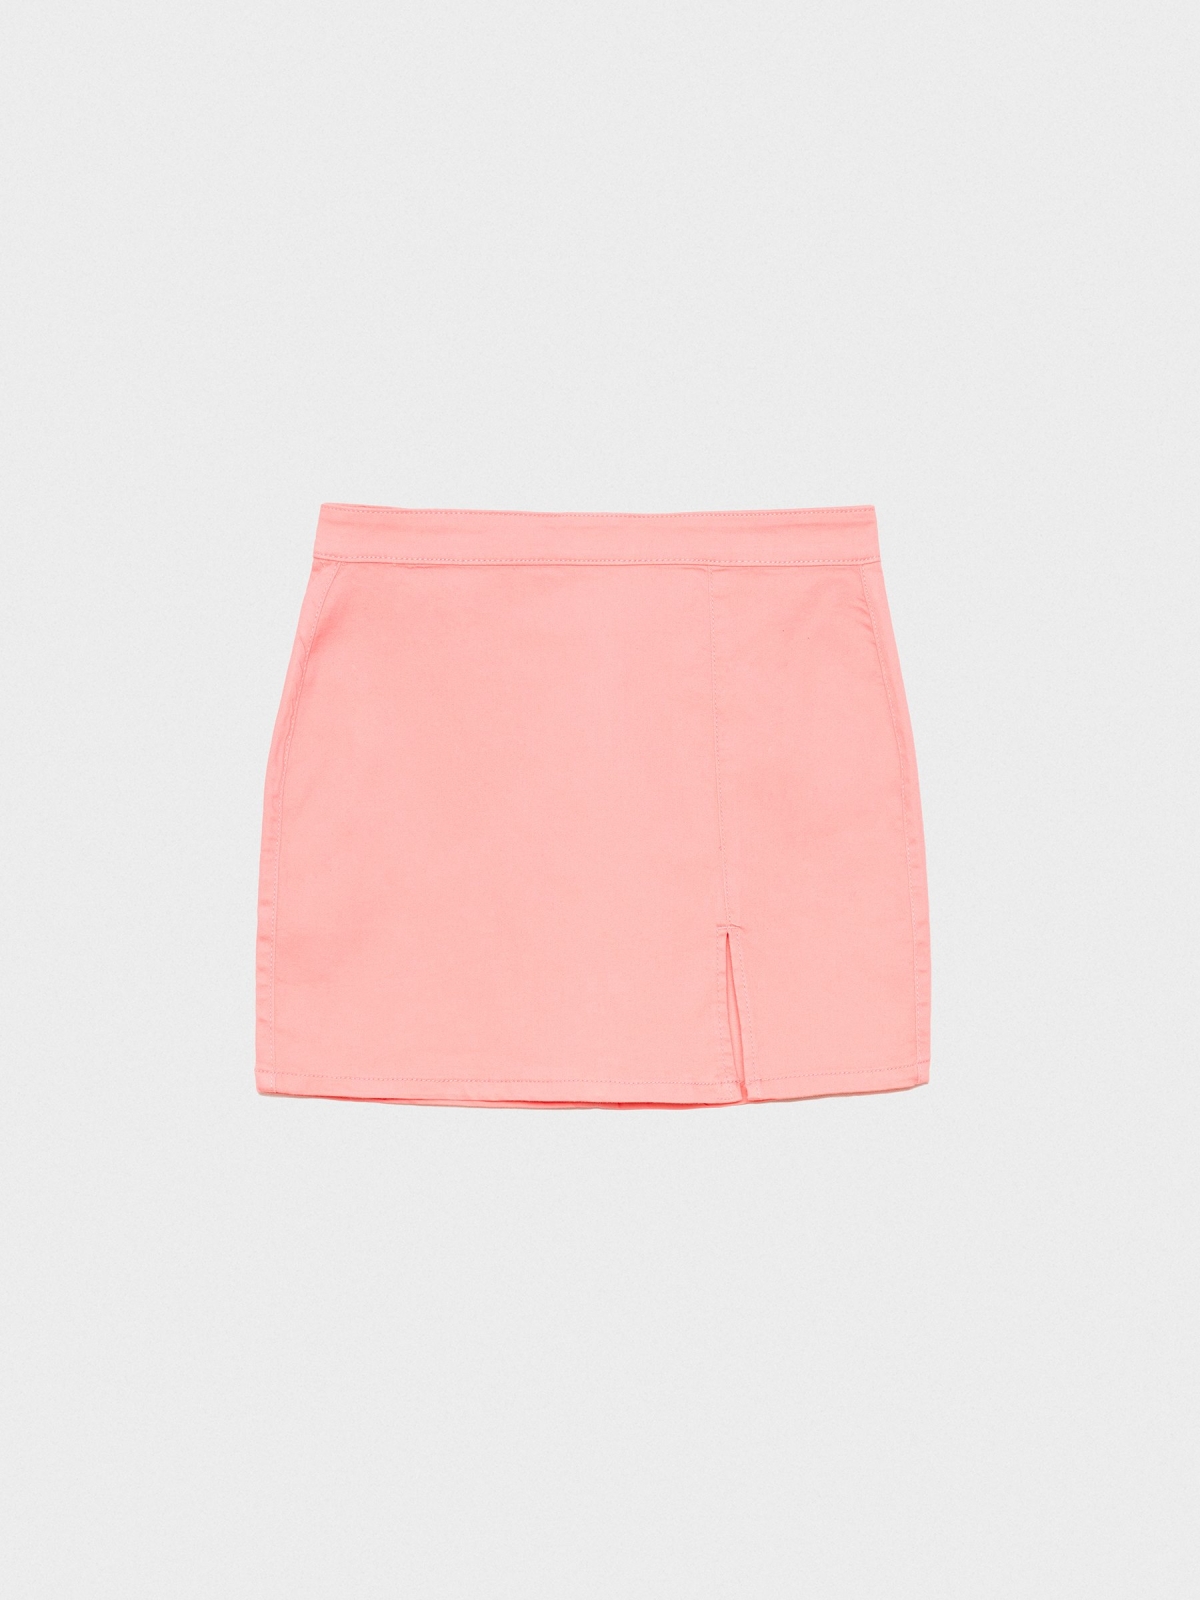  Mini slim skirt with slit light pink